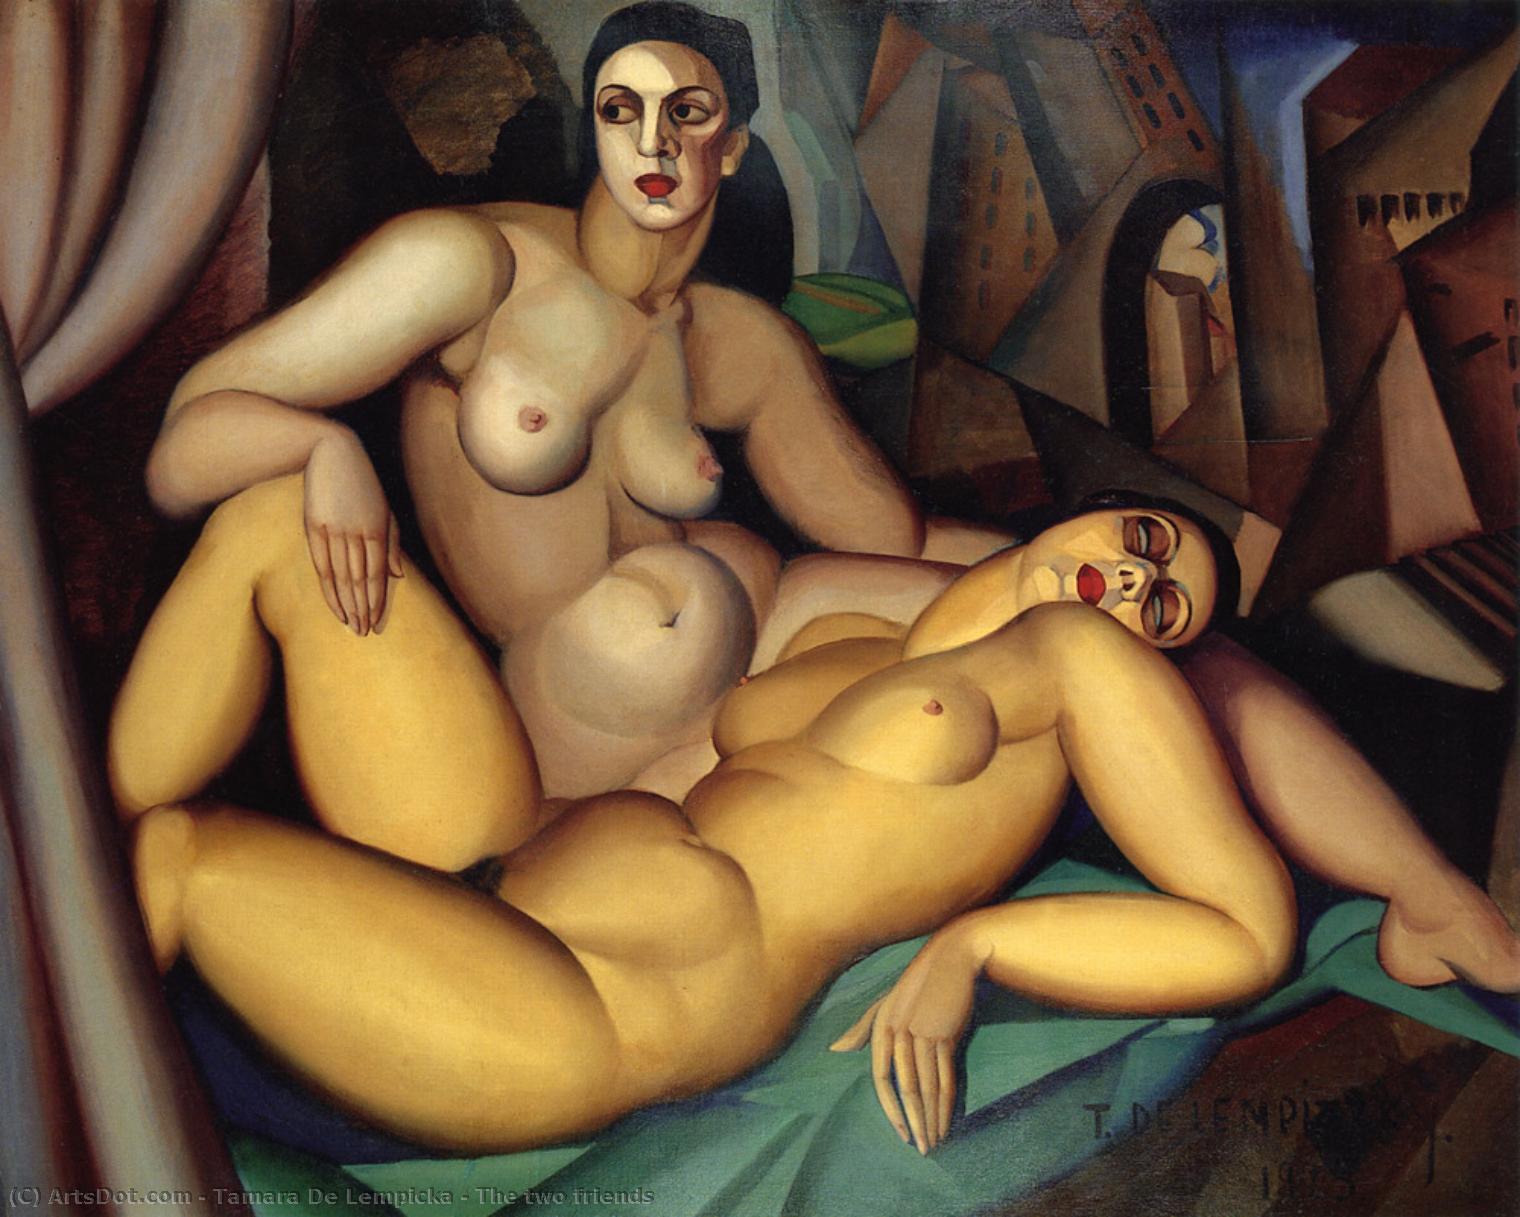 Order Oil Painting Replica The two friends, 1923 by Tamara De Lempicka (Inspired By) (1898-1980, Poland) | ArtsDot.com